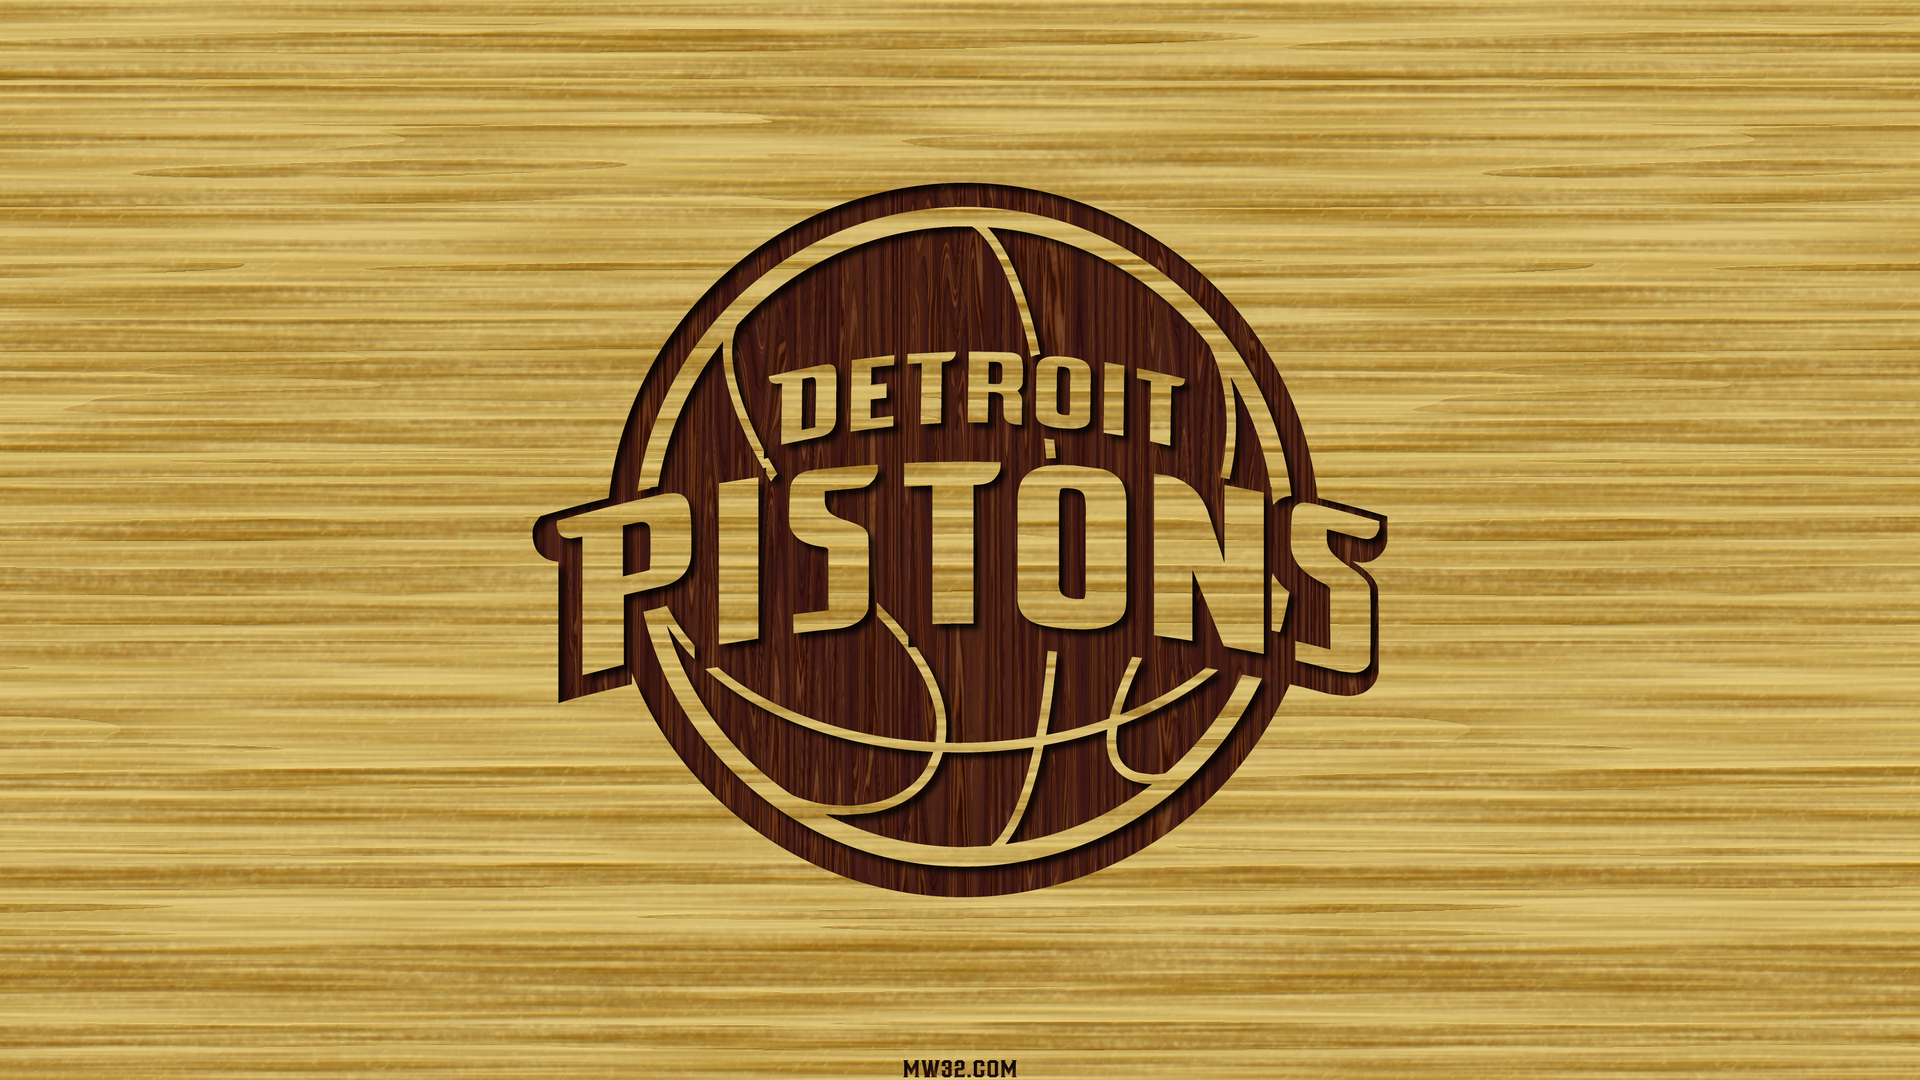 DETROIT PISTONS Basketball Nba brown logo over yellow Wallpaper